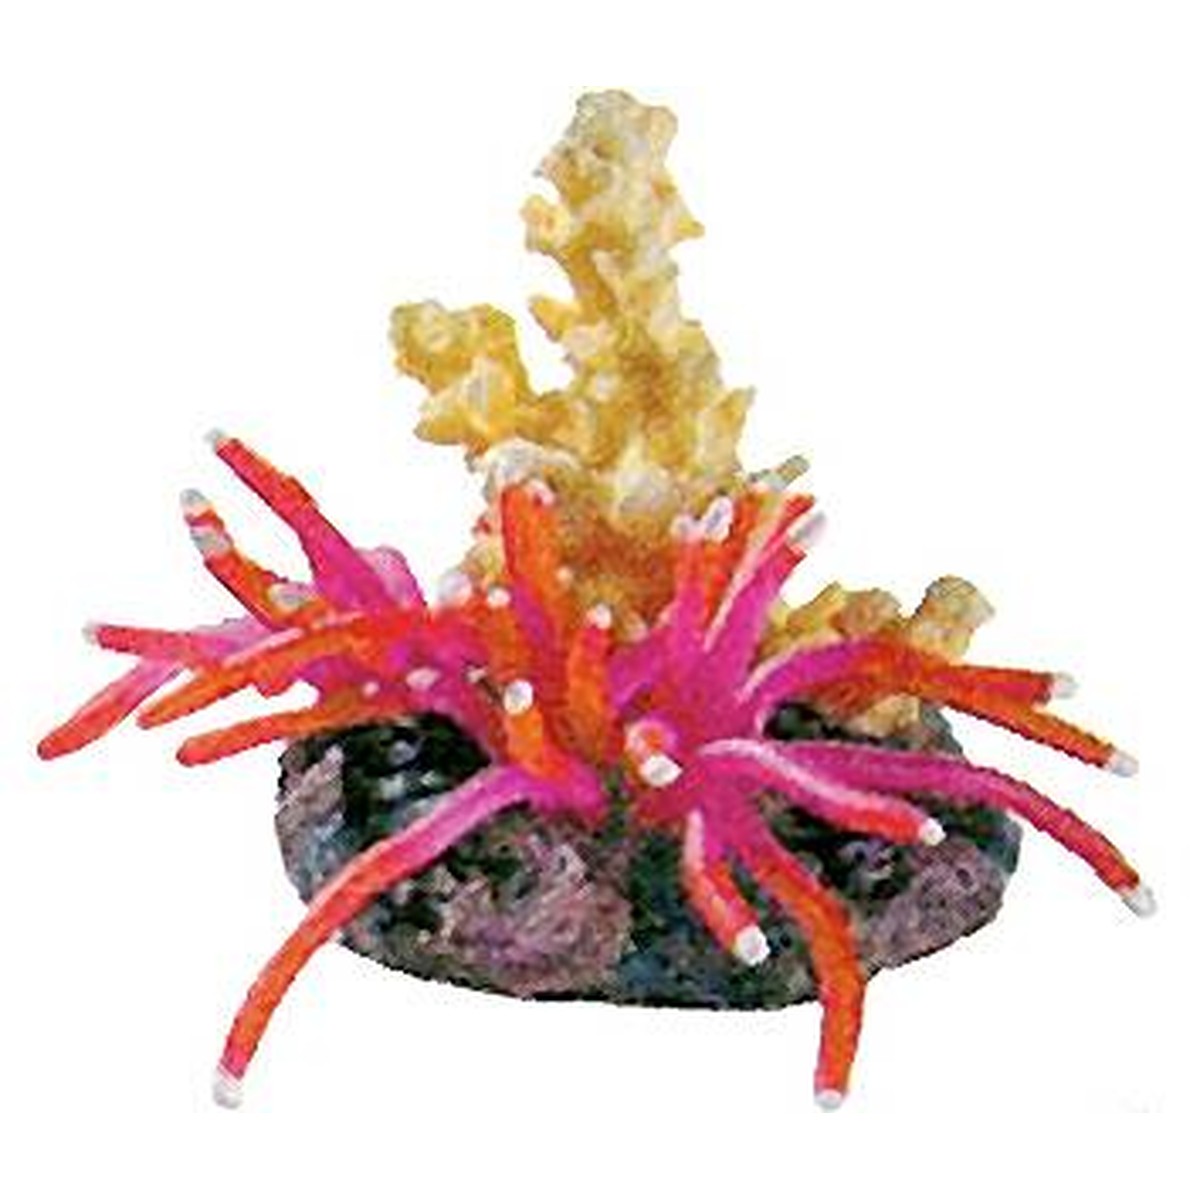   Ocean-Nature. Anemone-Polyp. 11x8x10cm  11x8x10cm